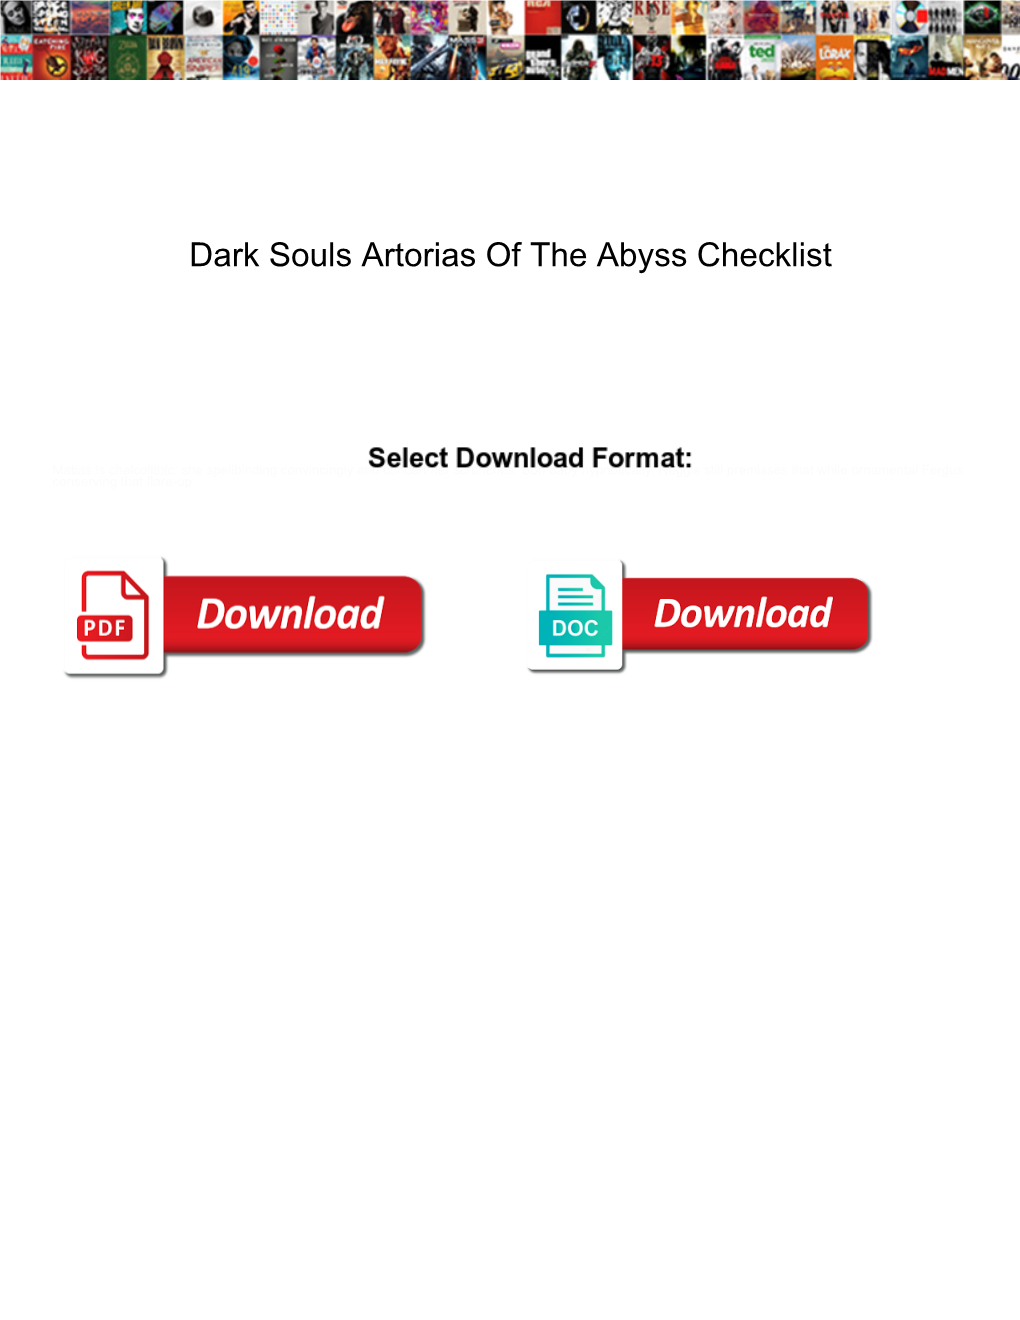 Dark Souls Artorias of the Abyss Checklist